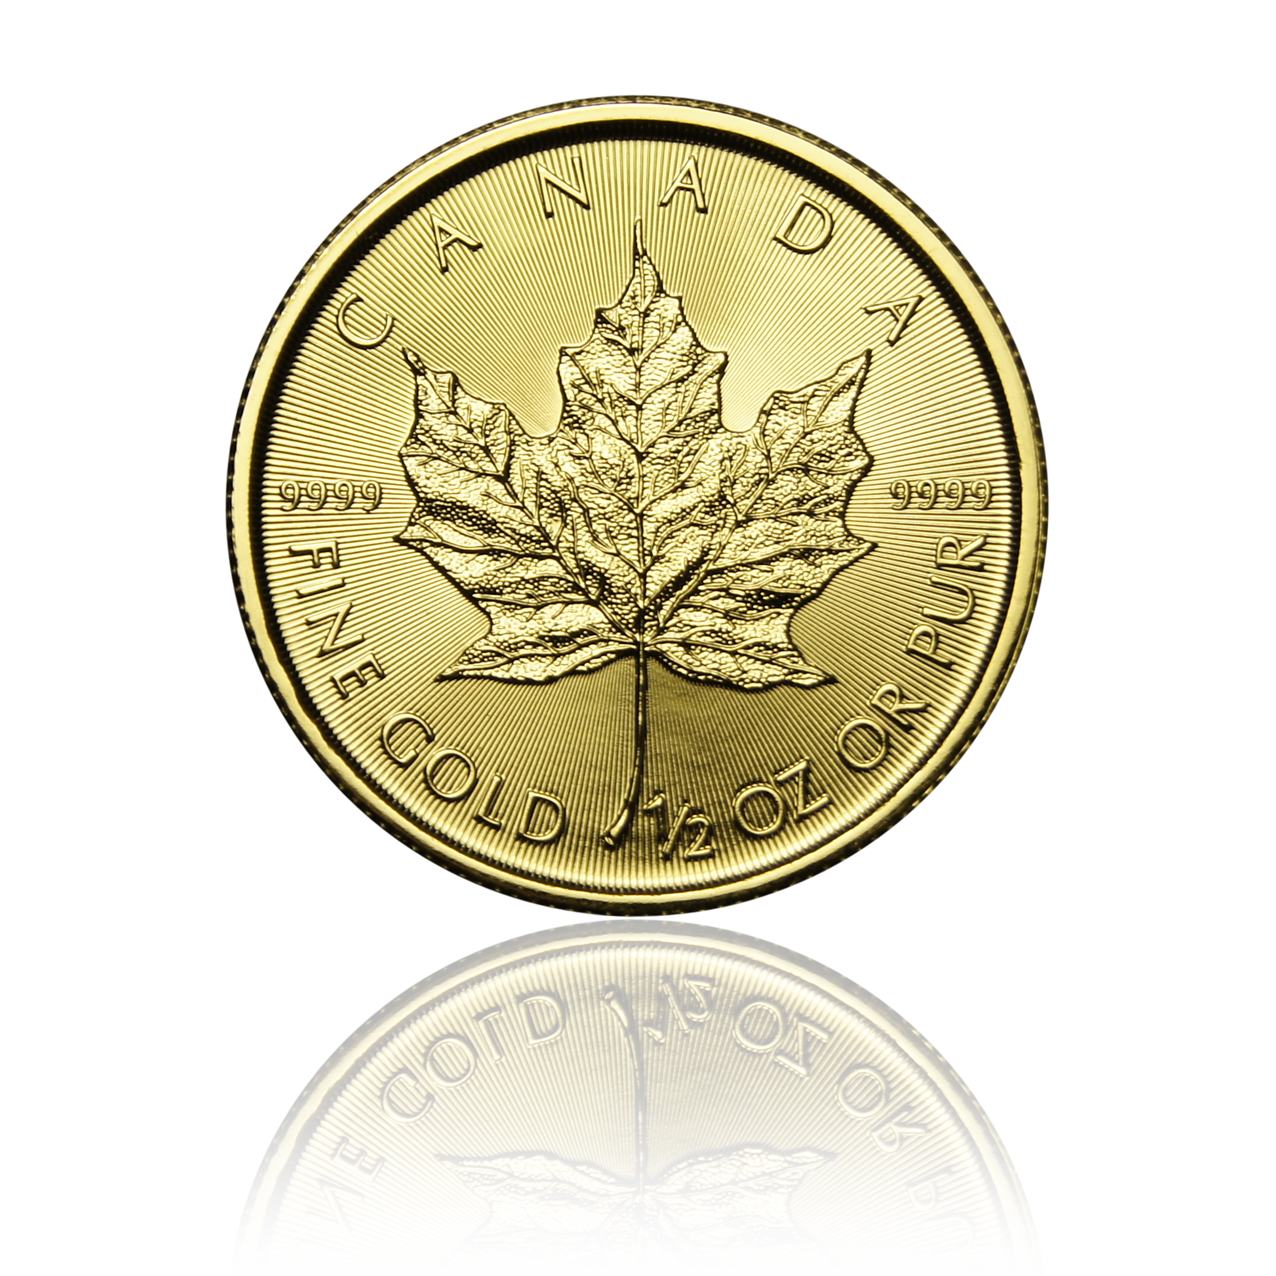 Maple Leaf - Canada 1/2 oz gold coin